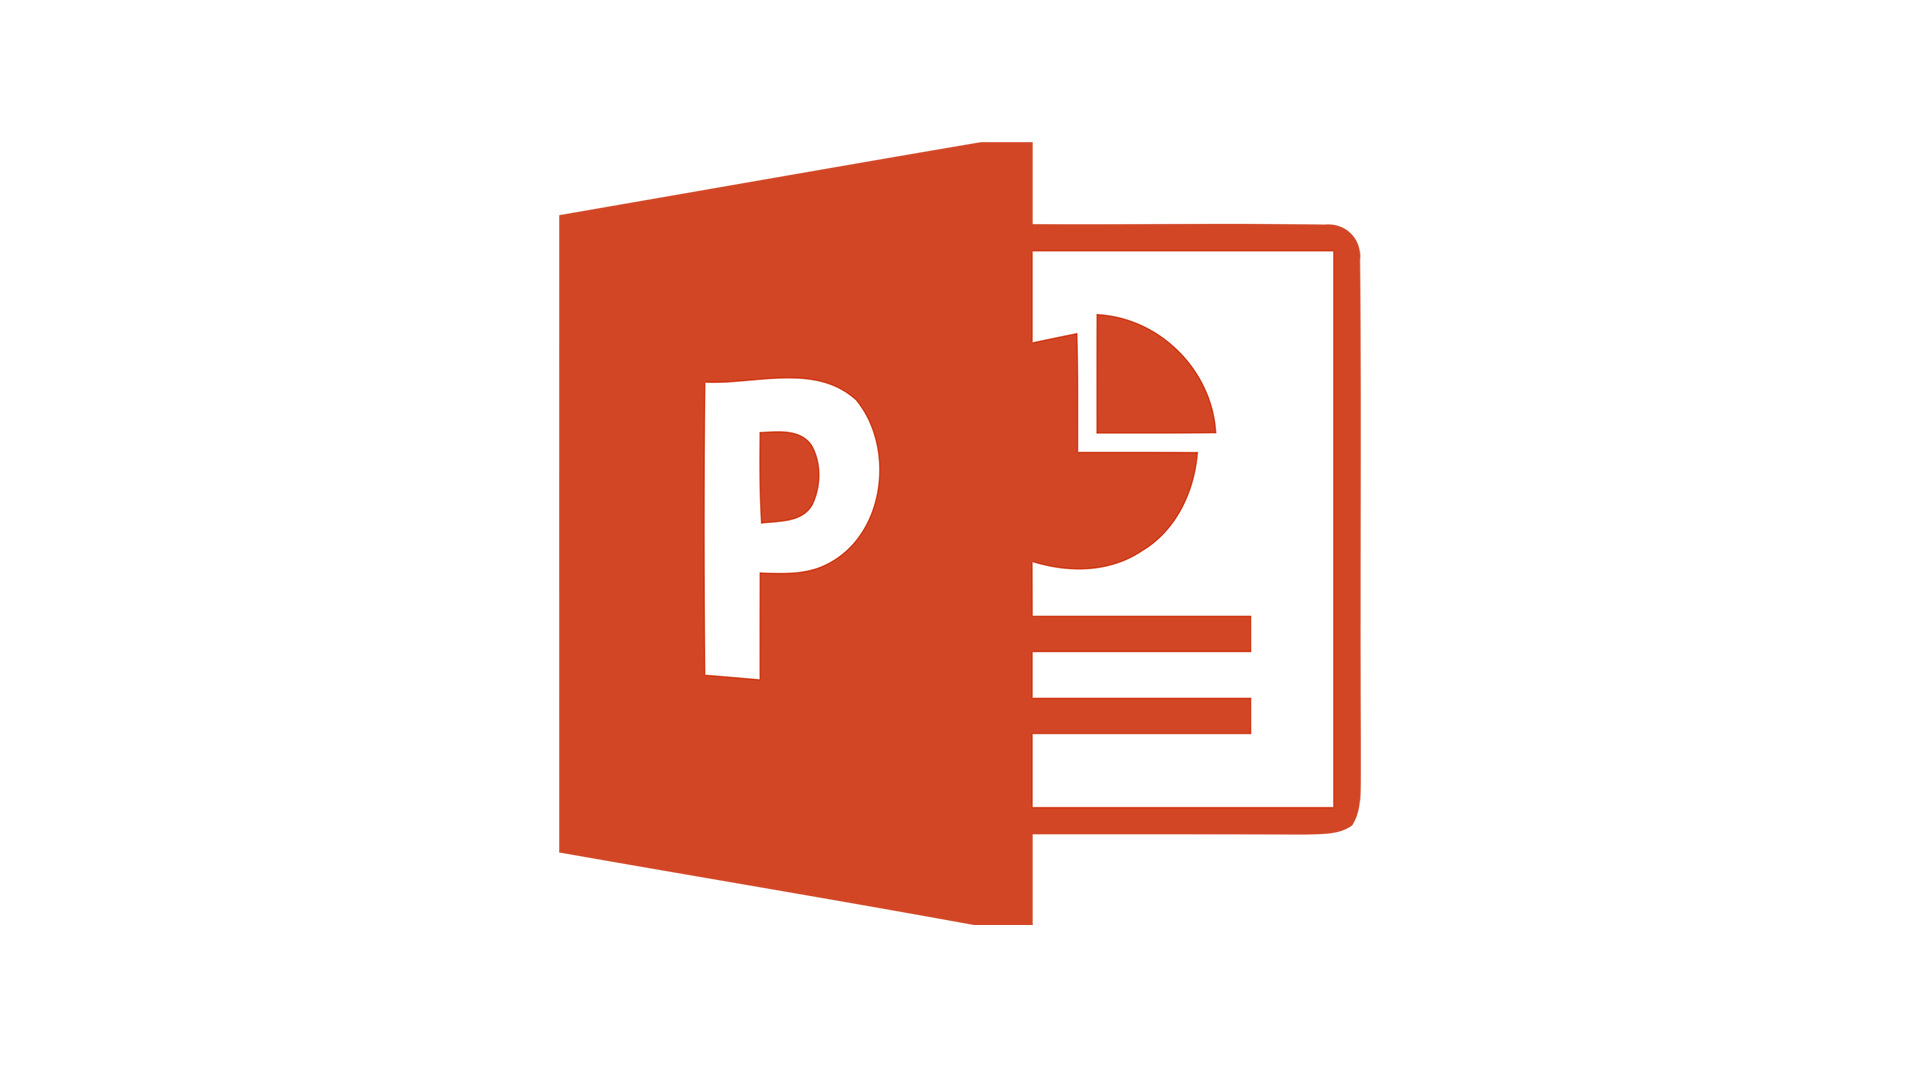 Проверить поинт. Microsoft POWERPOINT. Значок повер поинт. MS POWERPOINT логотип. Microsoft POWERPOINT картинки.